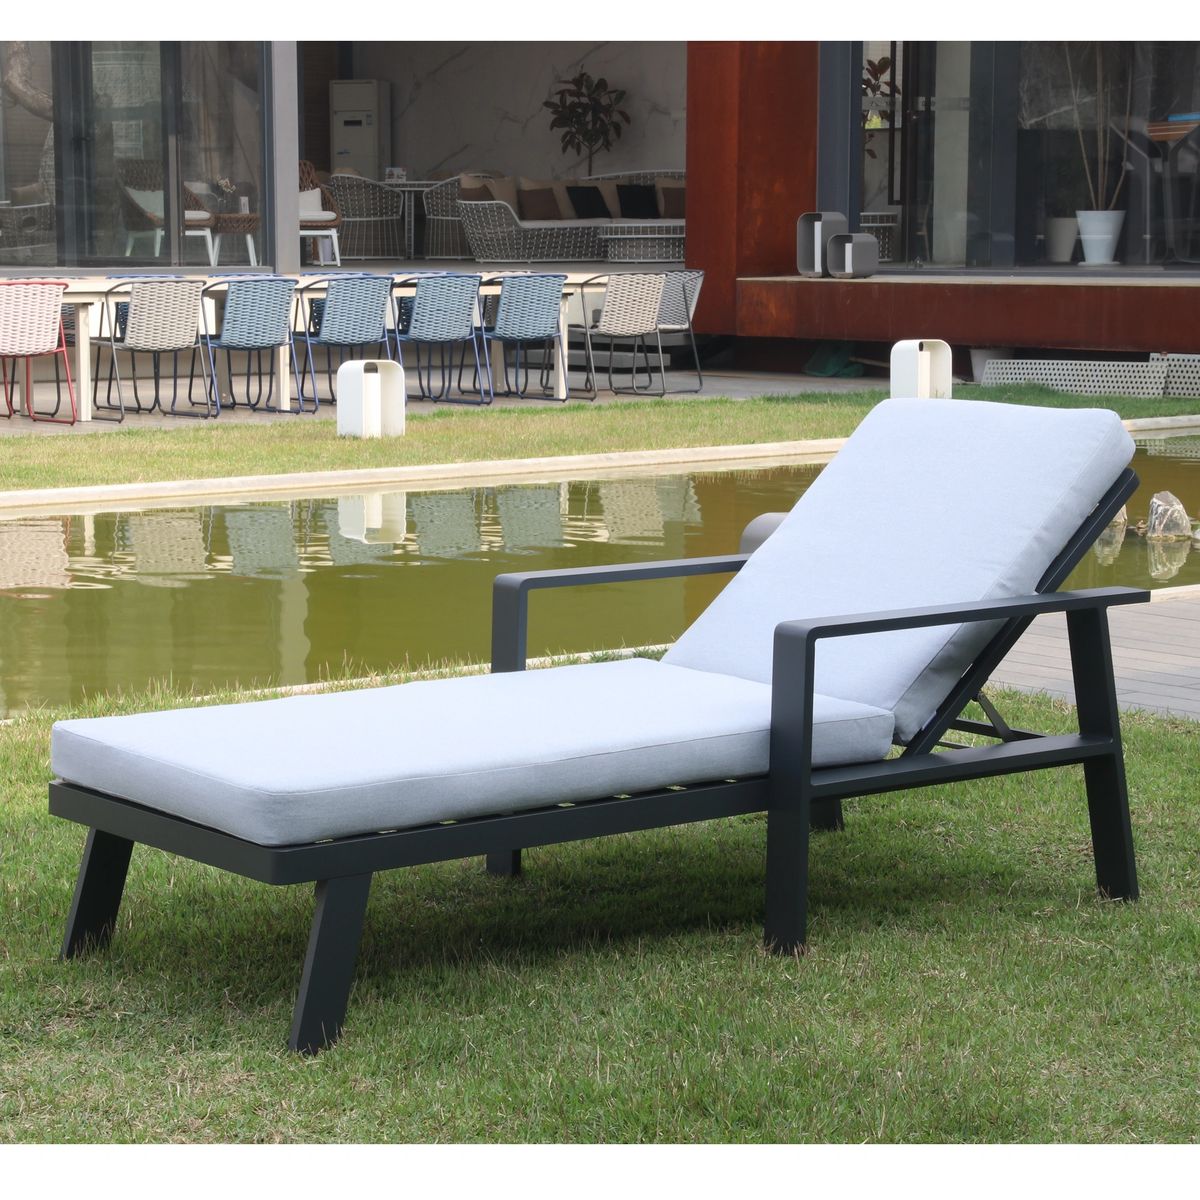 Lenen Komkommer pond Nofi Aluminum Outdoor Chaise Lounge - Series 3801